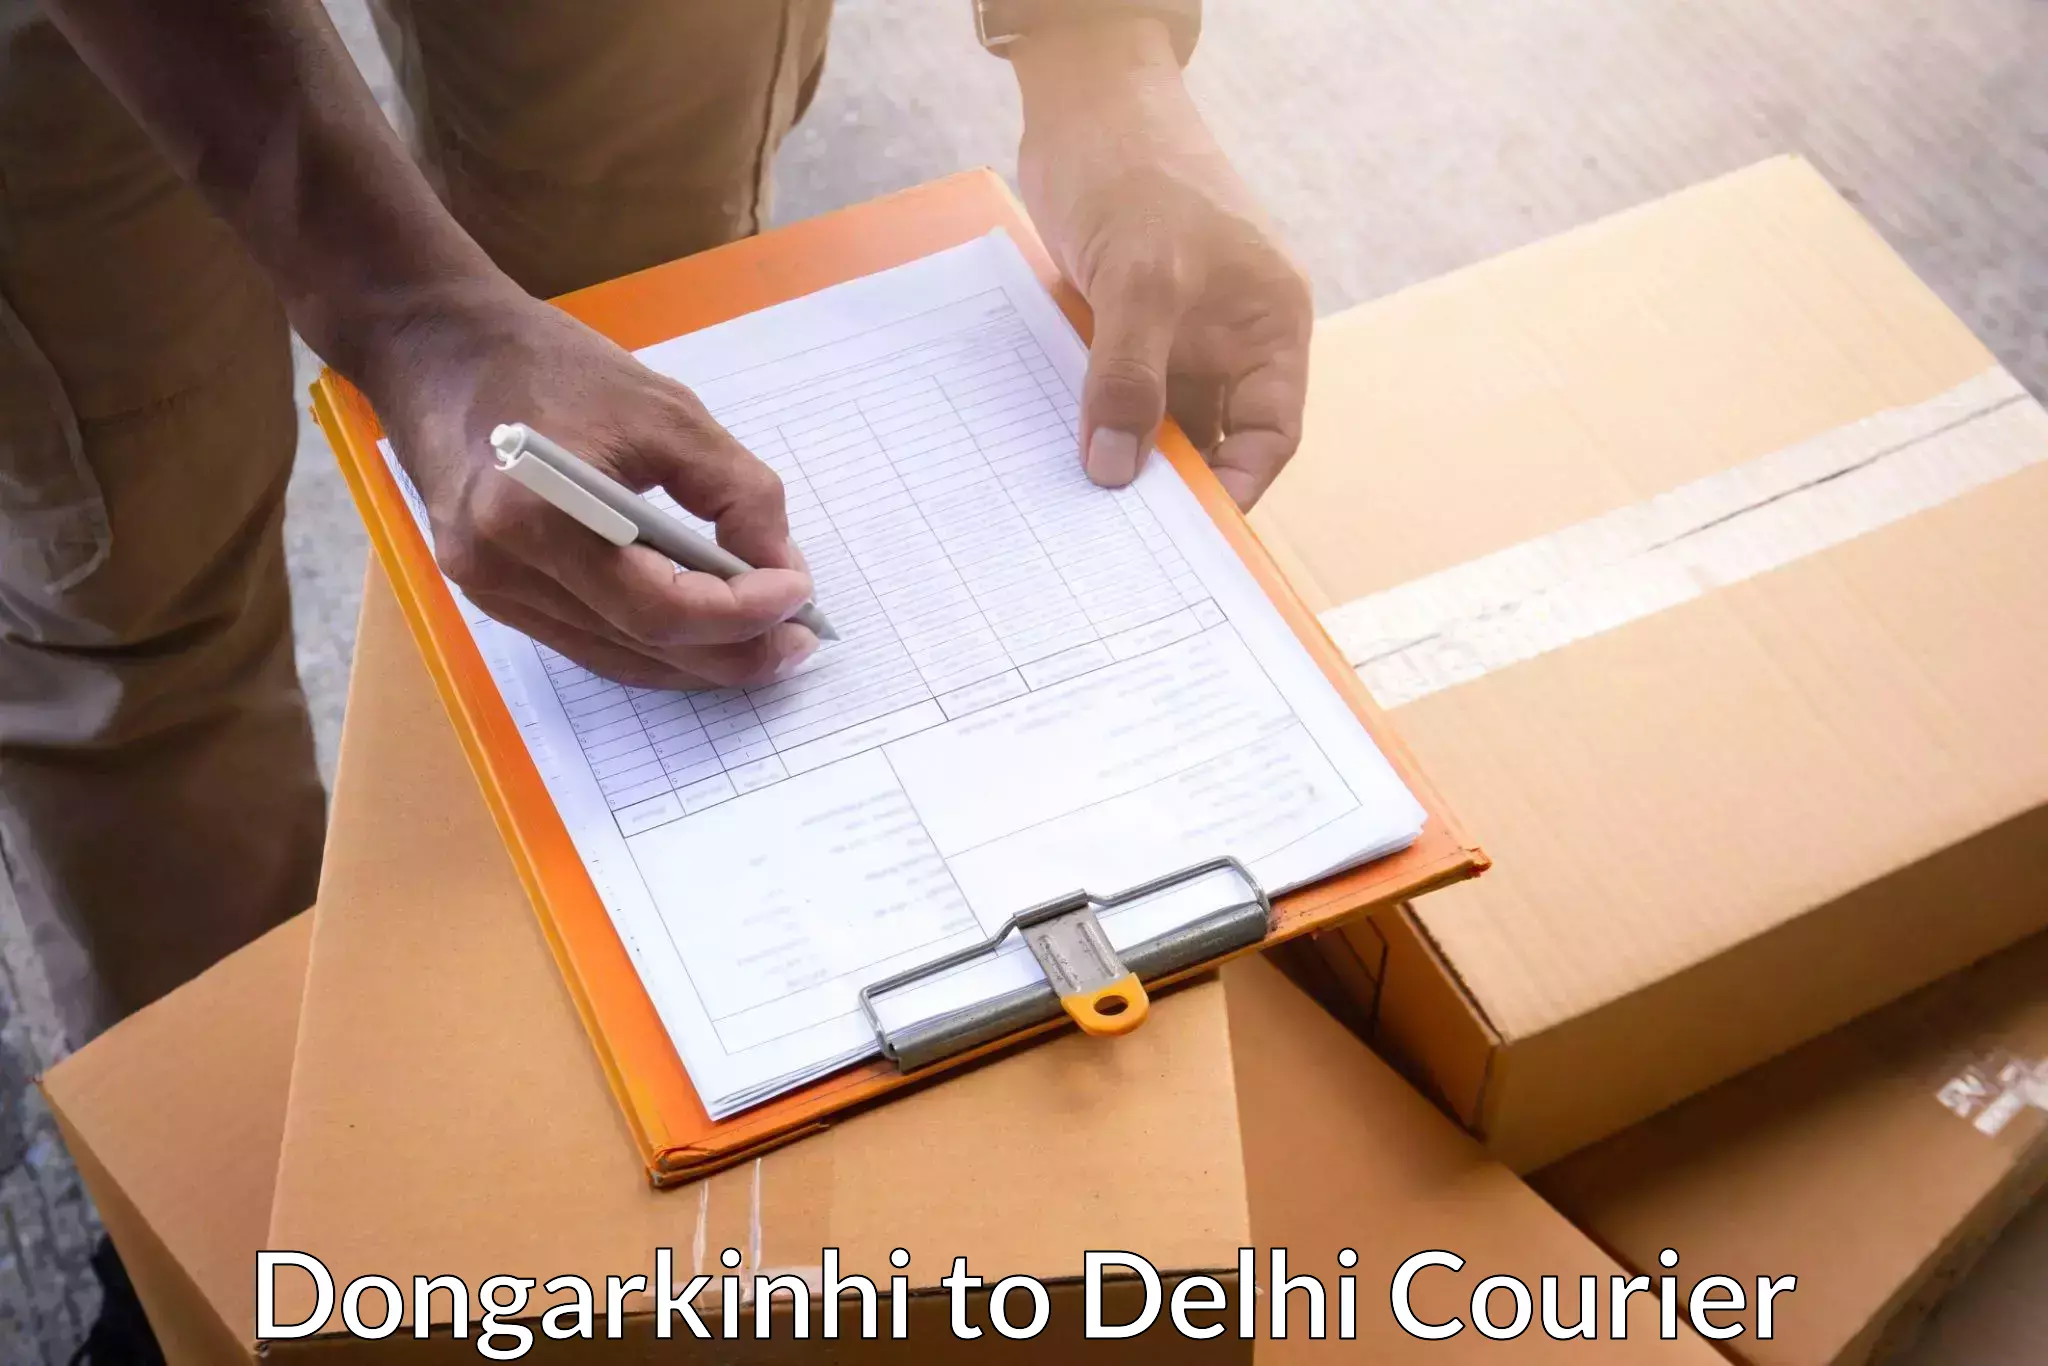 24-hour delivery options Dongarkinhi to IIT Delhi